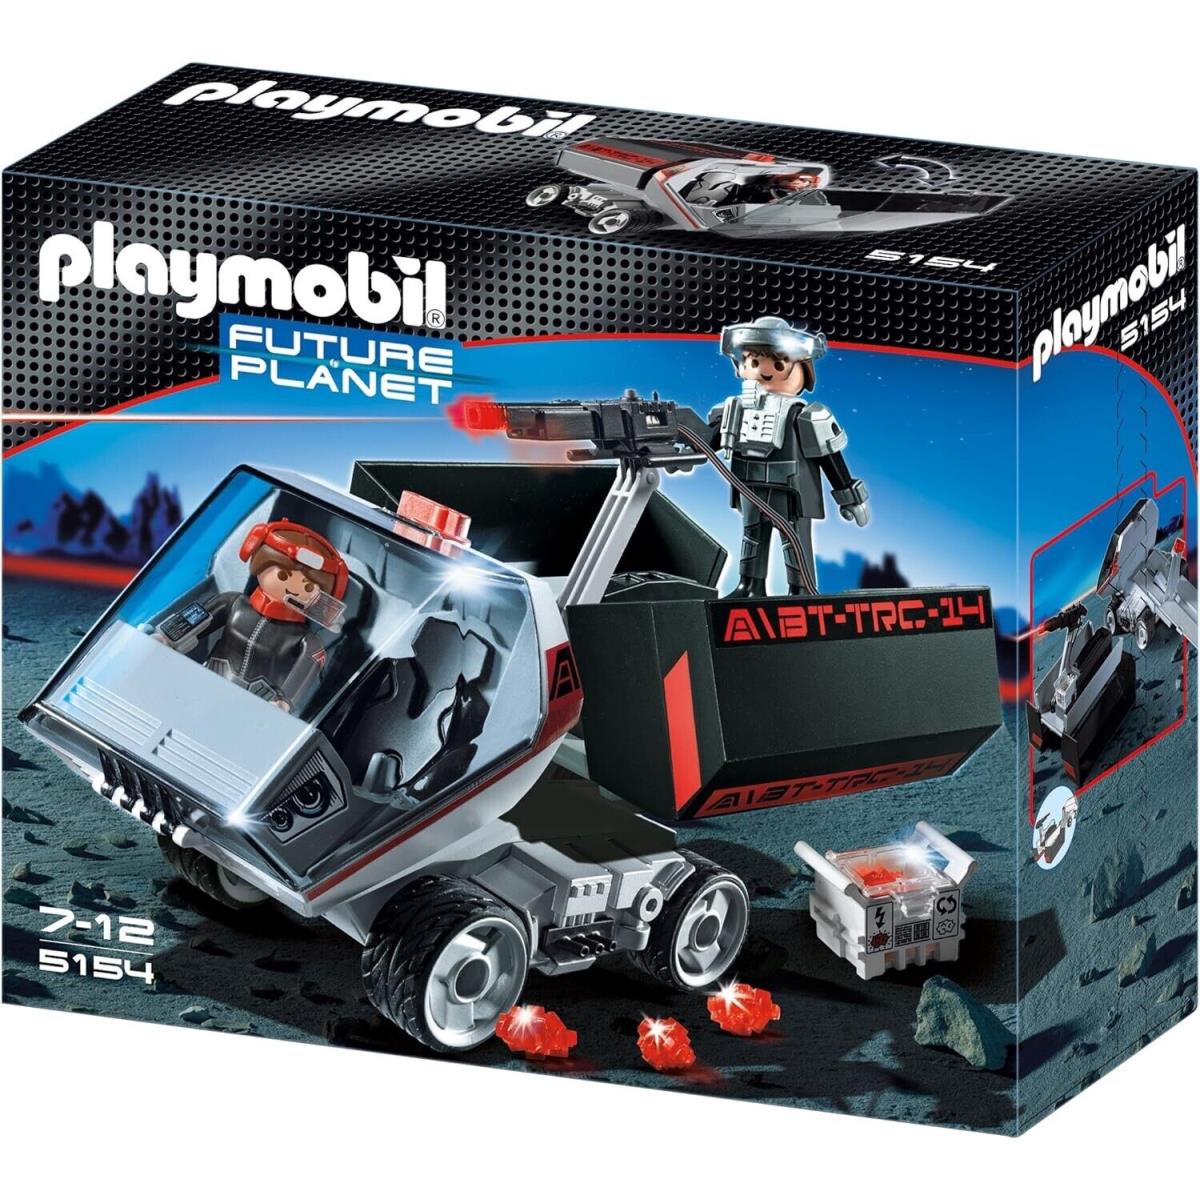 Playmobil Future Planet Dark Rangers Truck 5154